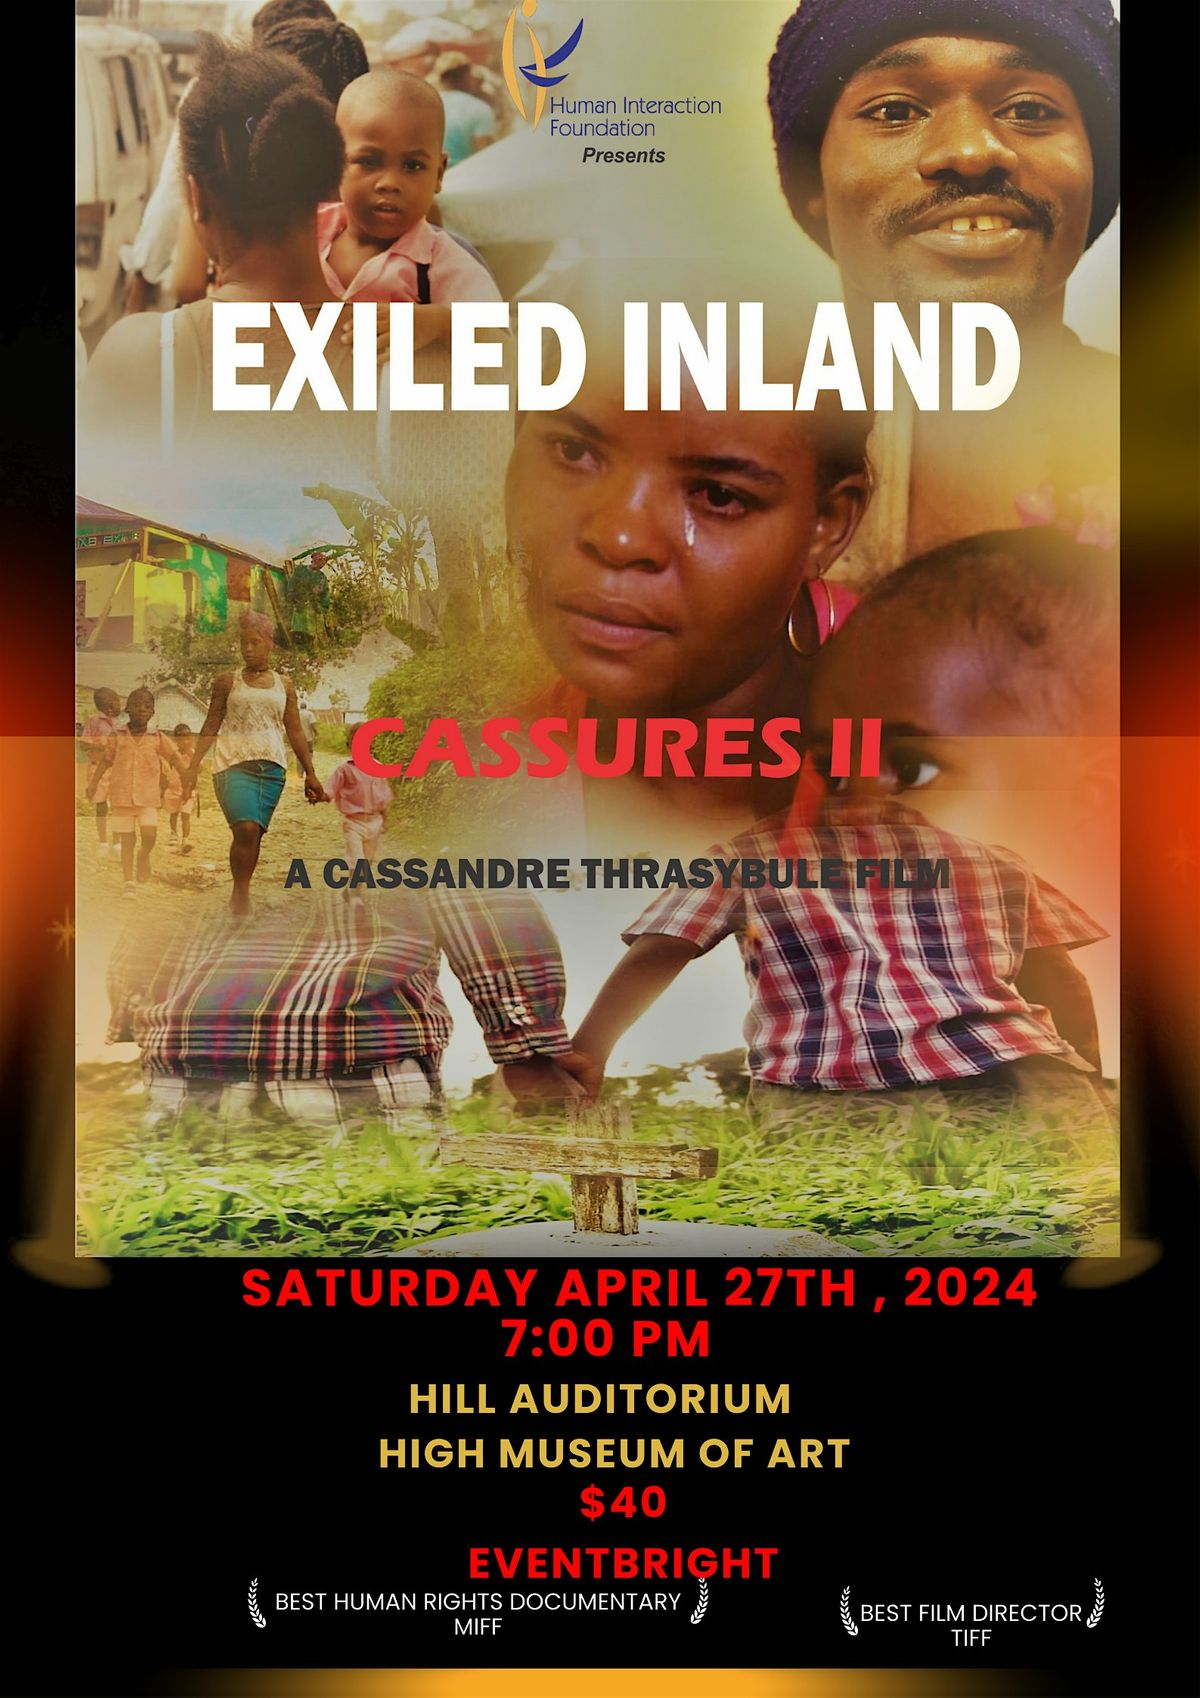 Exiled inland.  Cassures II.